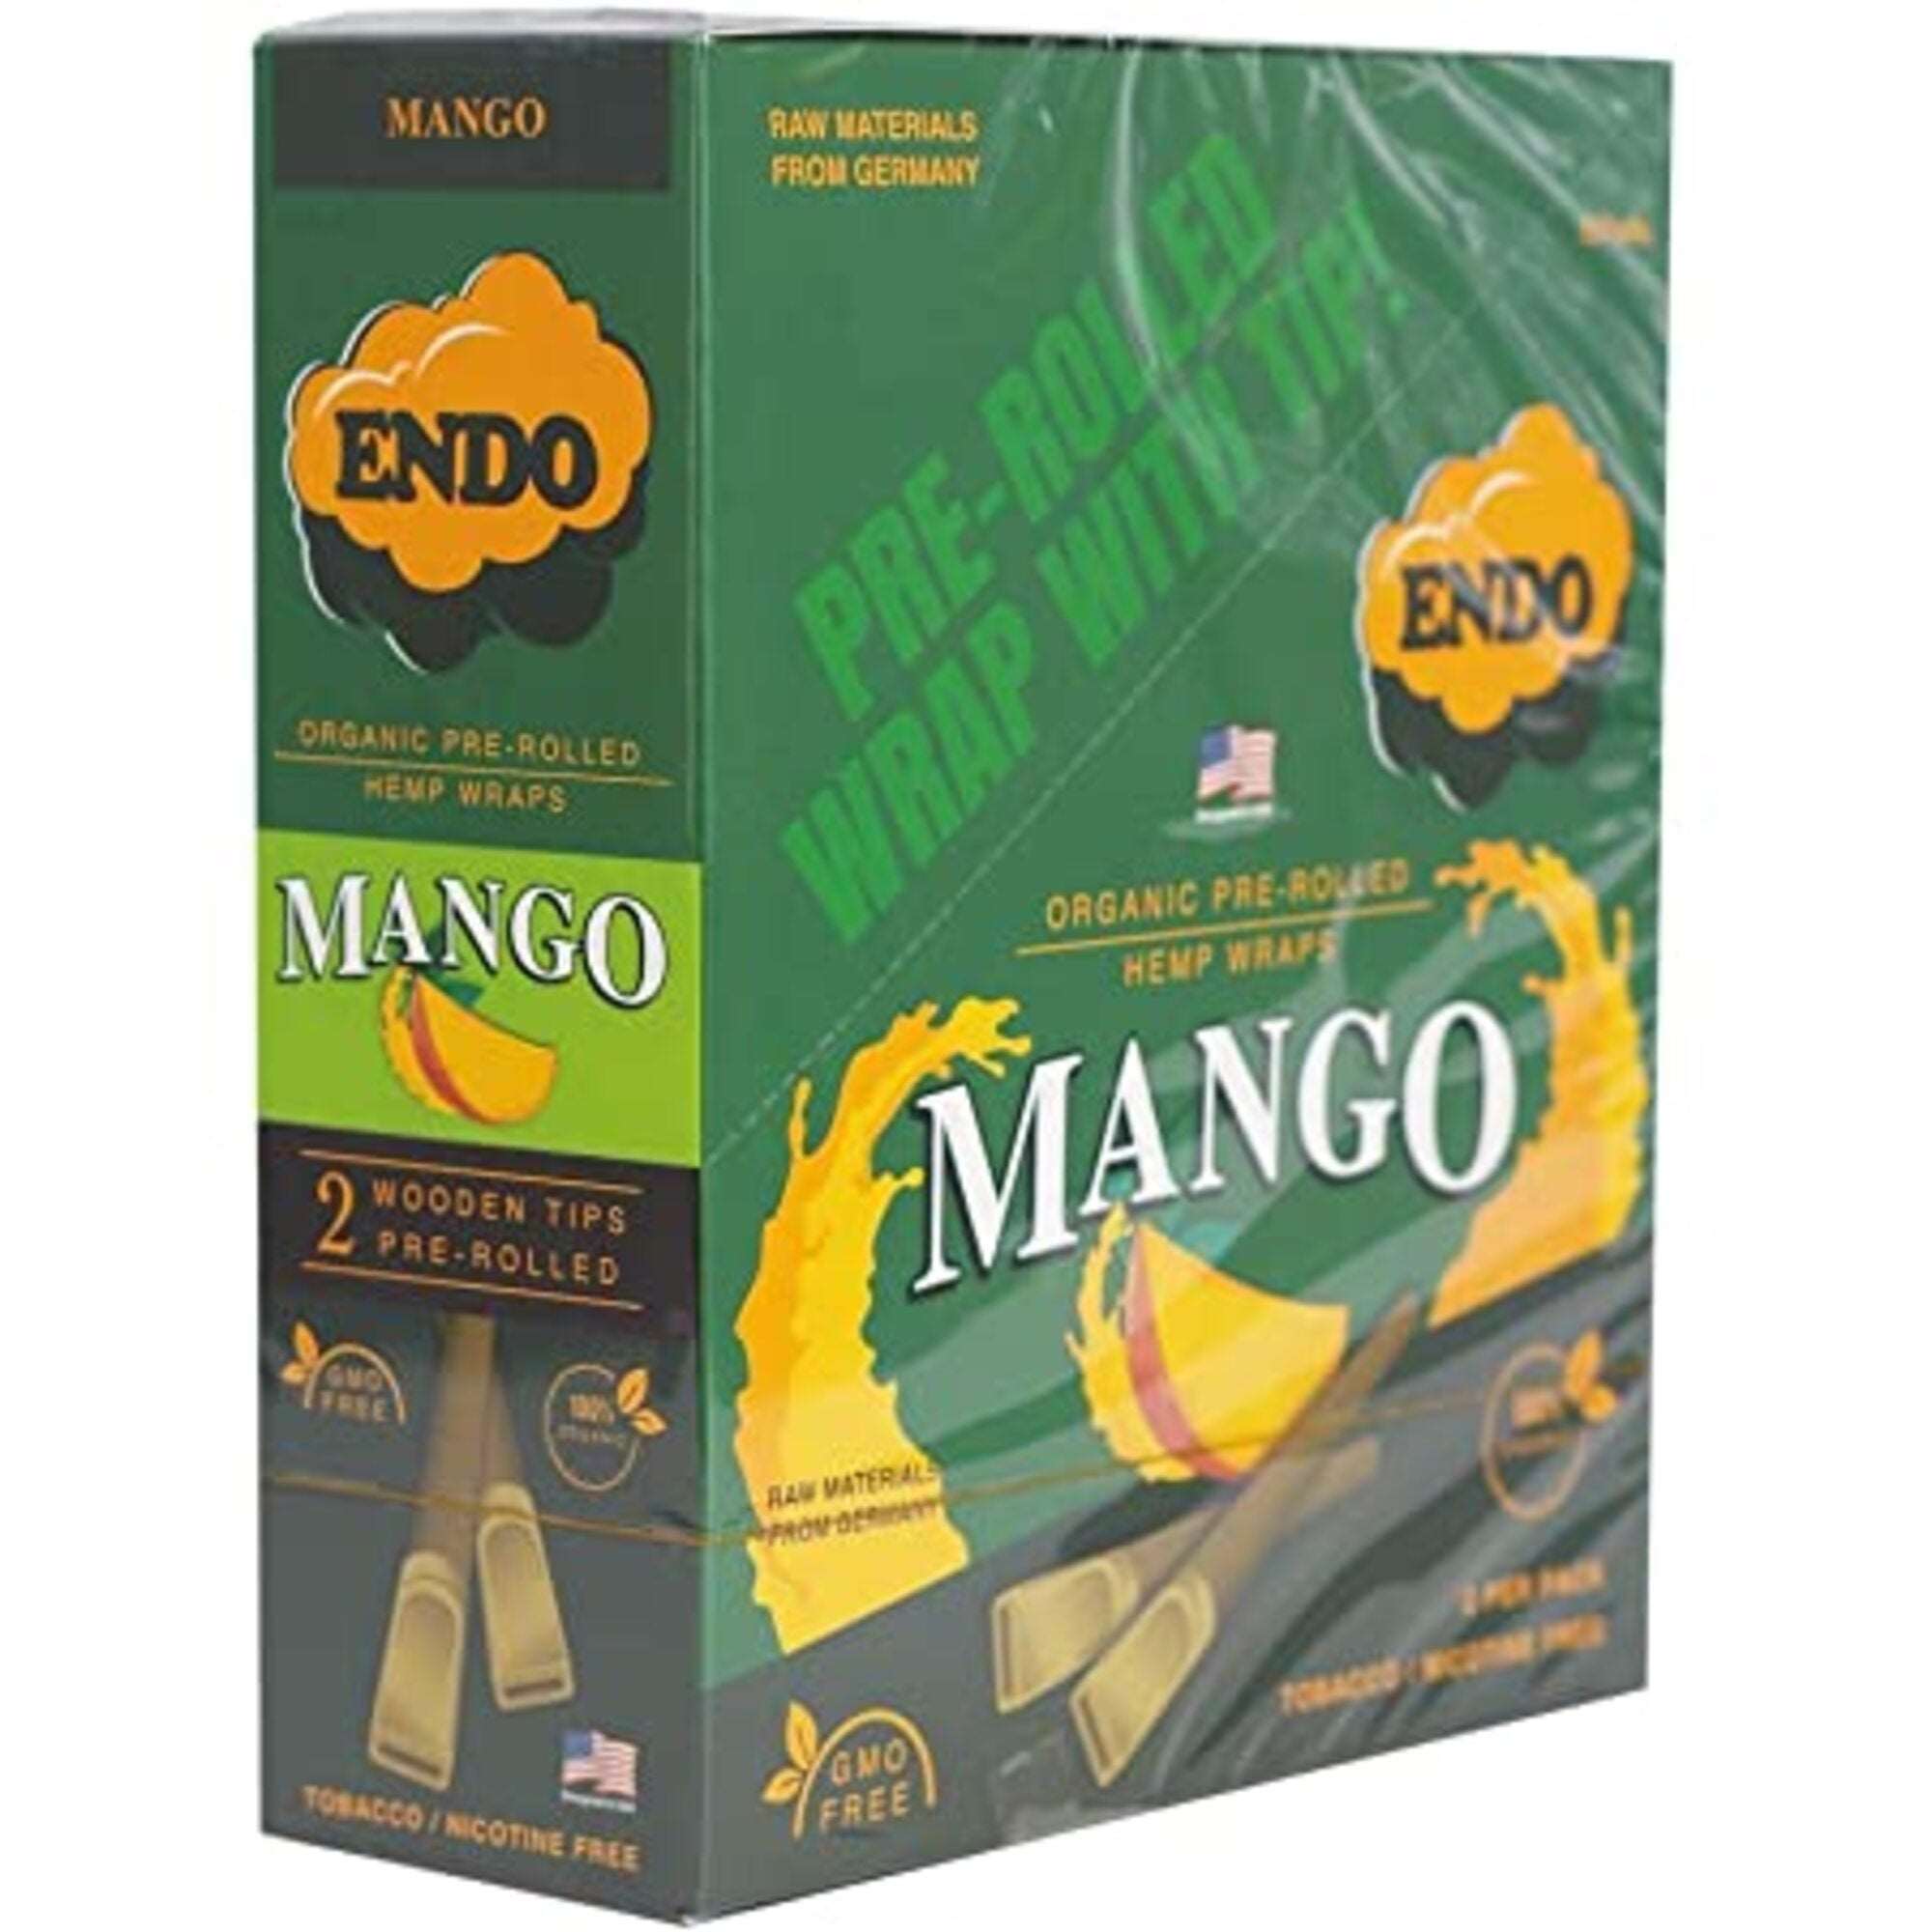 ENDO Mango Wraps 15ct 2pk - Supply Natural